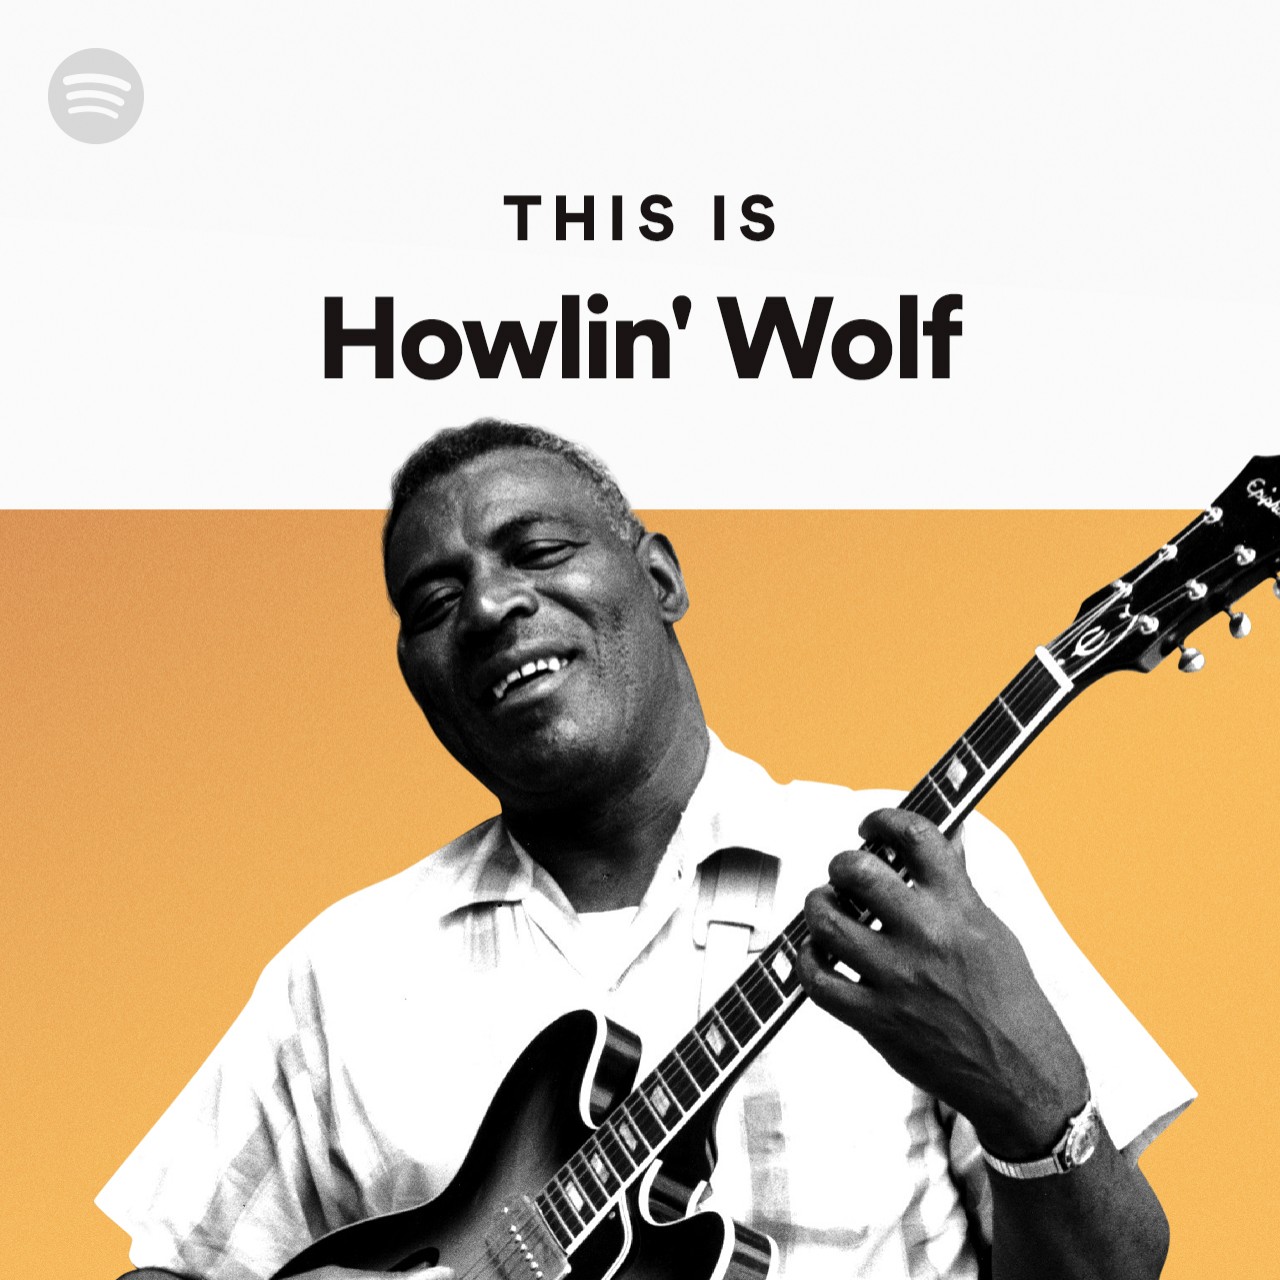 howling wolf musician